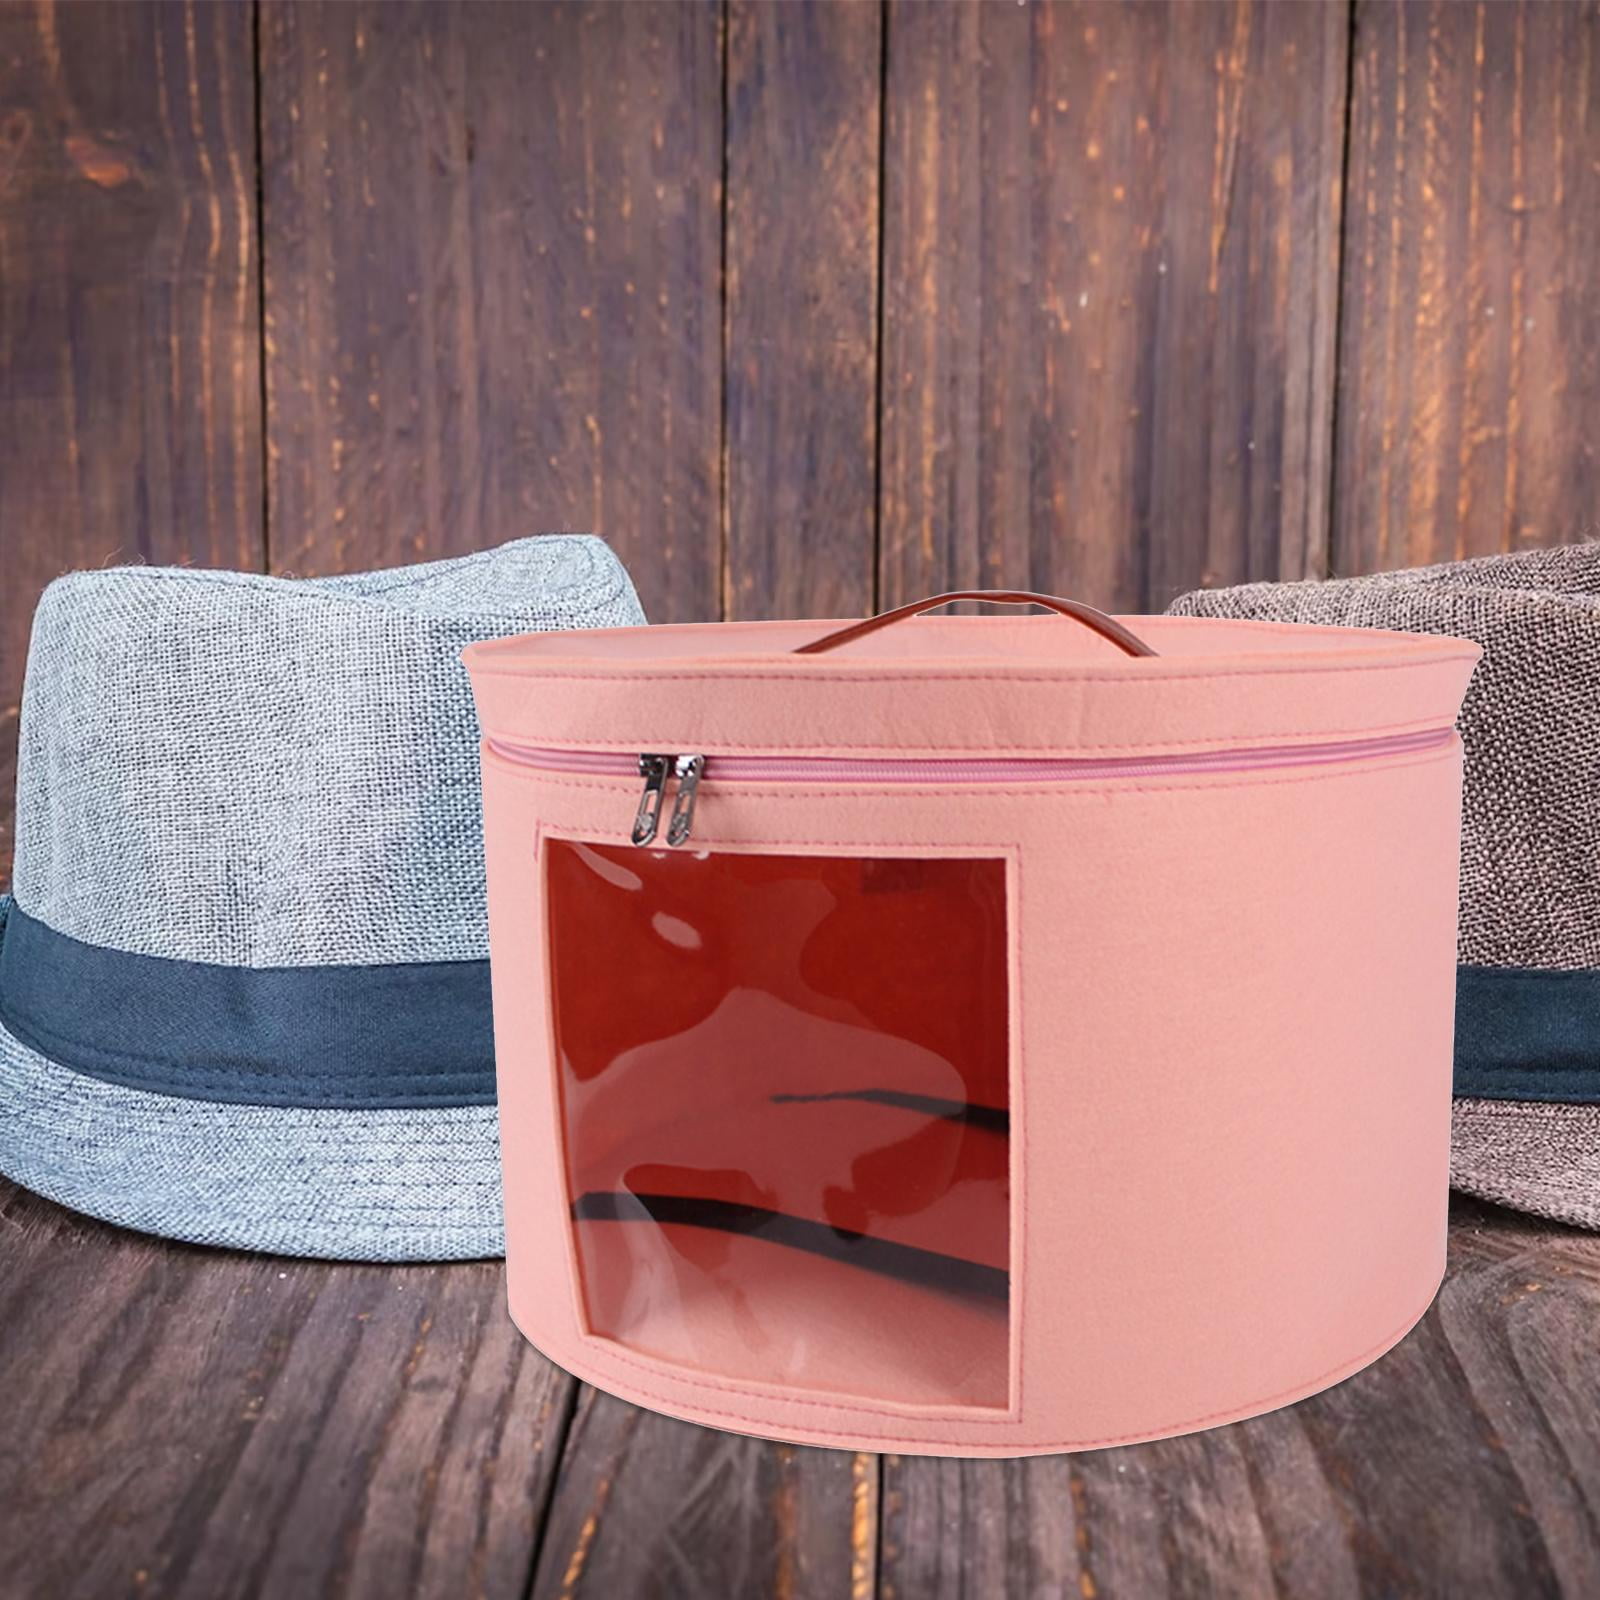 Allnice Hat Storage Box with Lid, 17inch Diameter Pop Up Hat Boxes for  Women Men Storage Large Round Foldable Sturdy Travel Hat Organizer Box  Storage Bin Bag with Handle Zipper(Grey) 